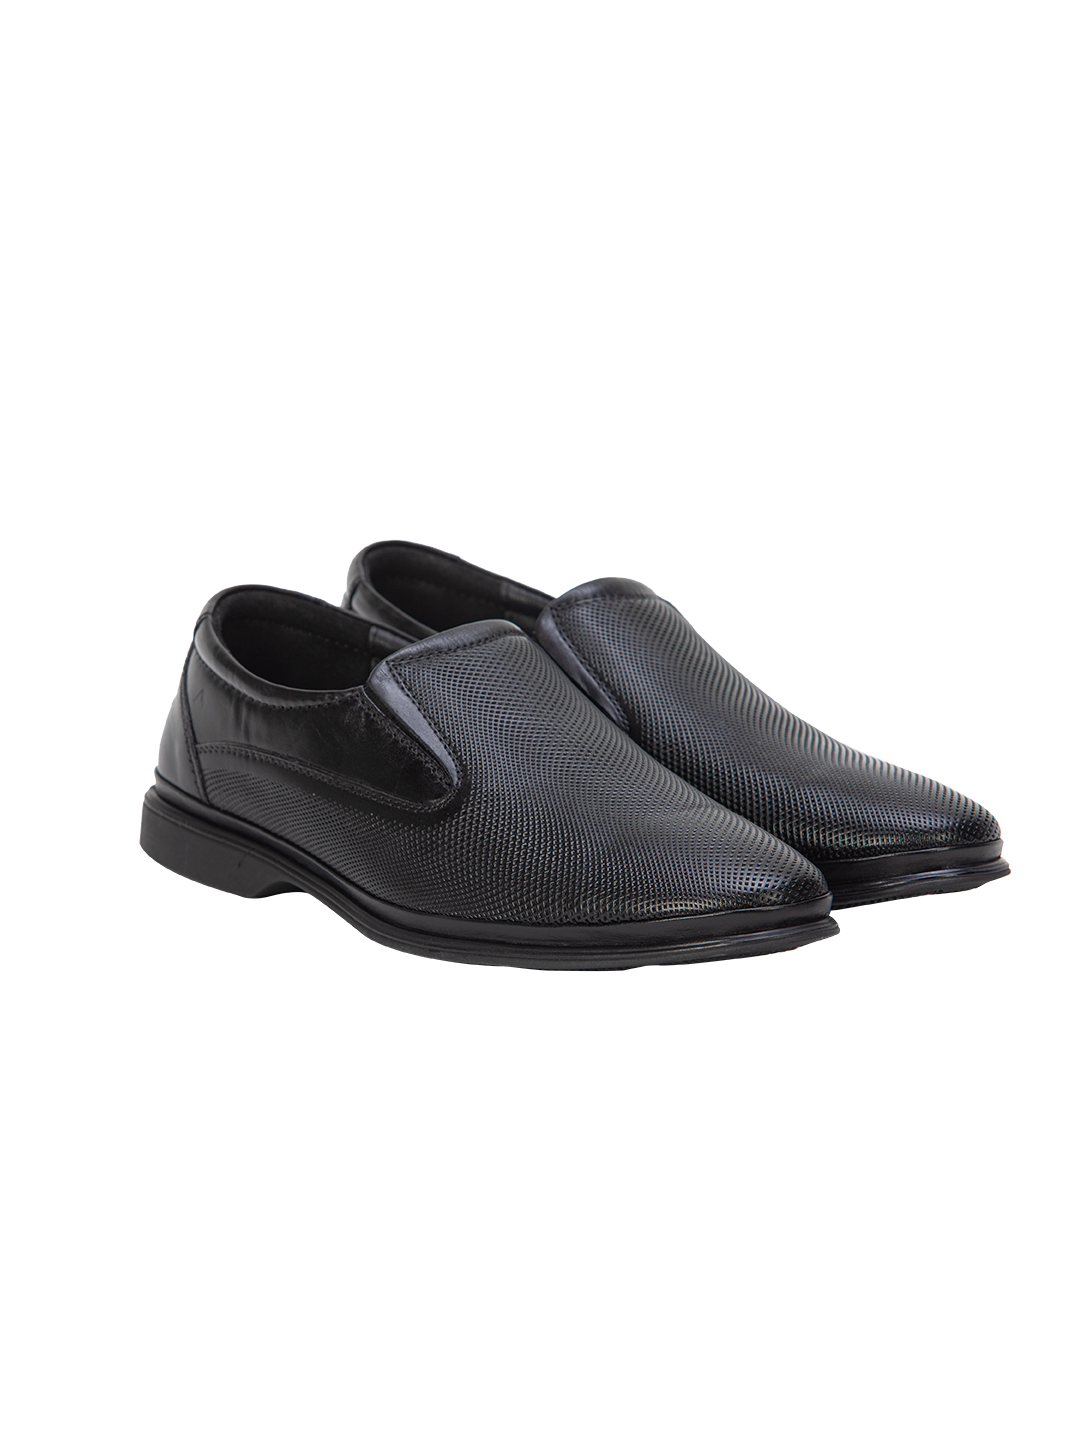 Buy Von Wellx Germany Comfort Mondaine Casual Black Shoes Online in Saudi Arabia